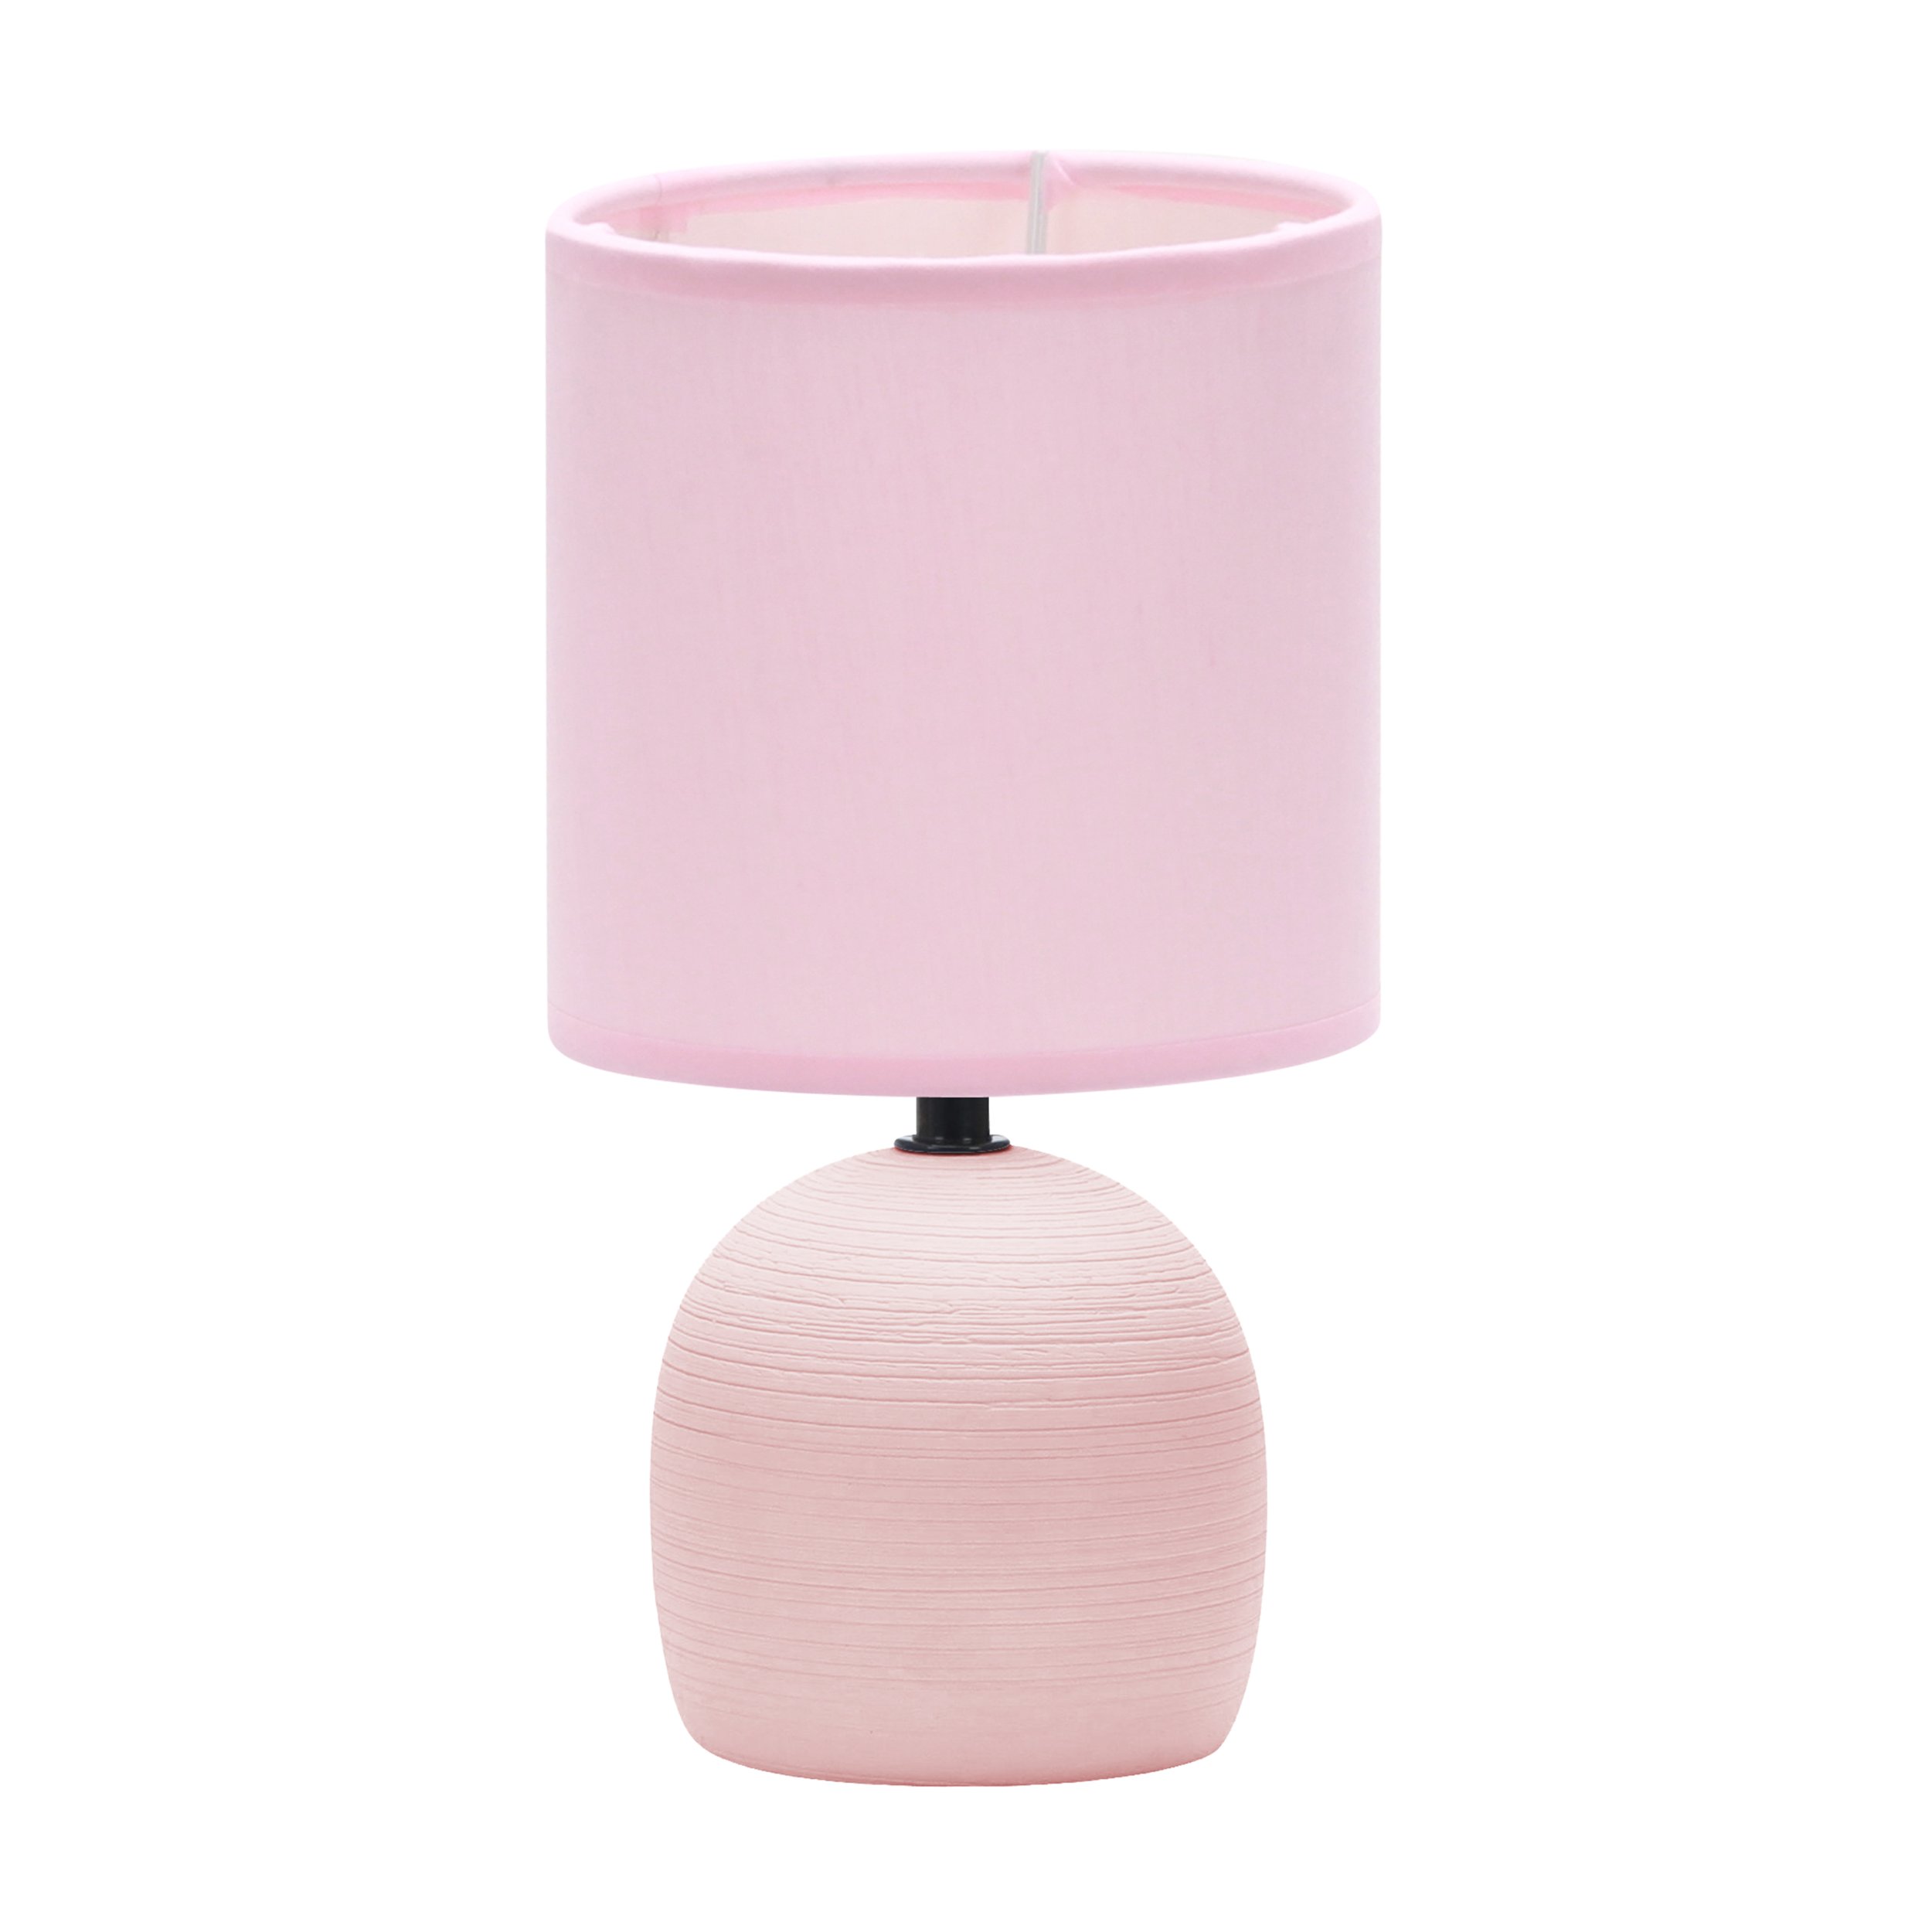 Декоративная настольная лампа Rivoli SHERON 7067-501, цвет розовый 7067-501 Б0057260 - фото 1